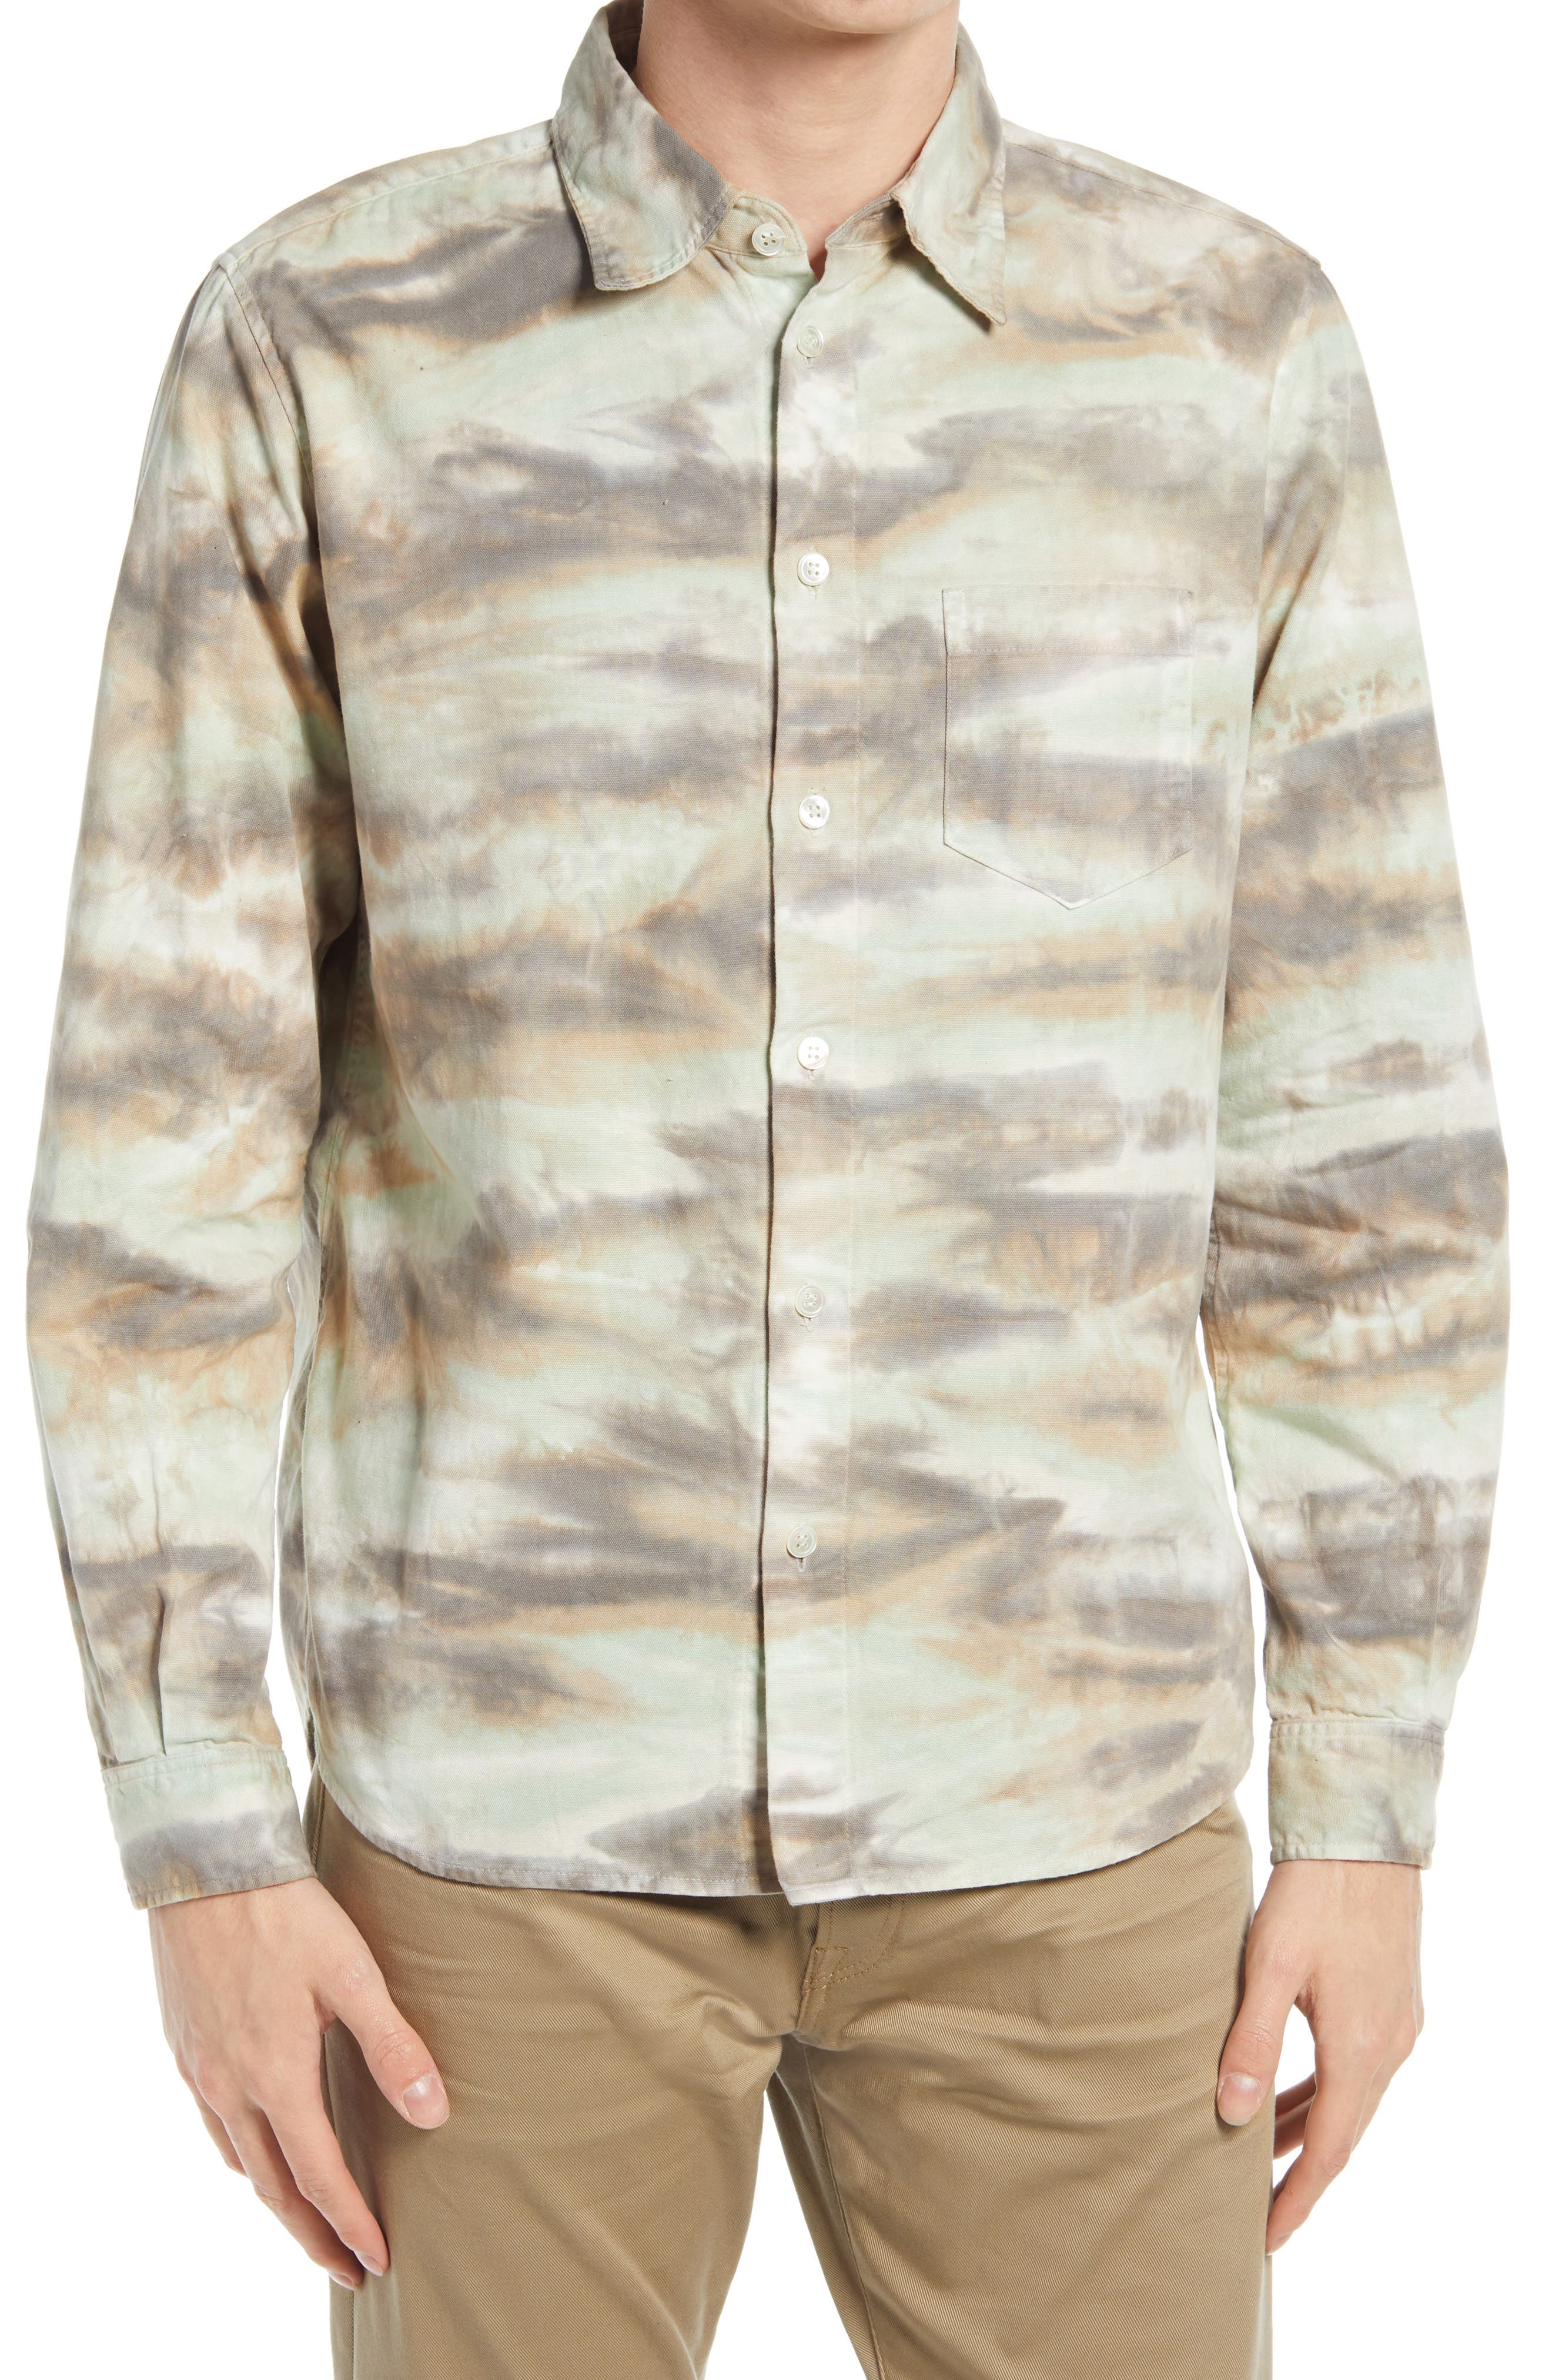 John Elliott Corpus Cotton Button-Up Shirt in Marrin Camo at Nordstrom, Size Medium